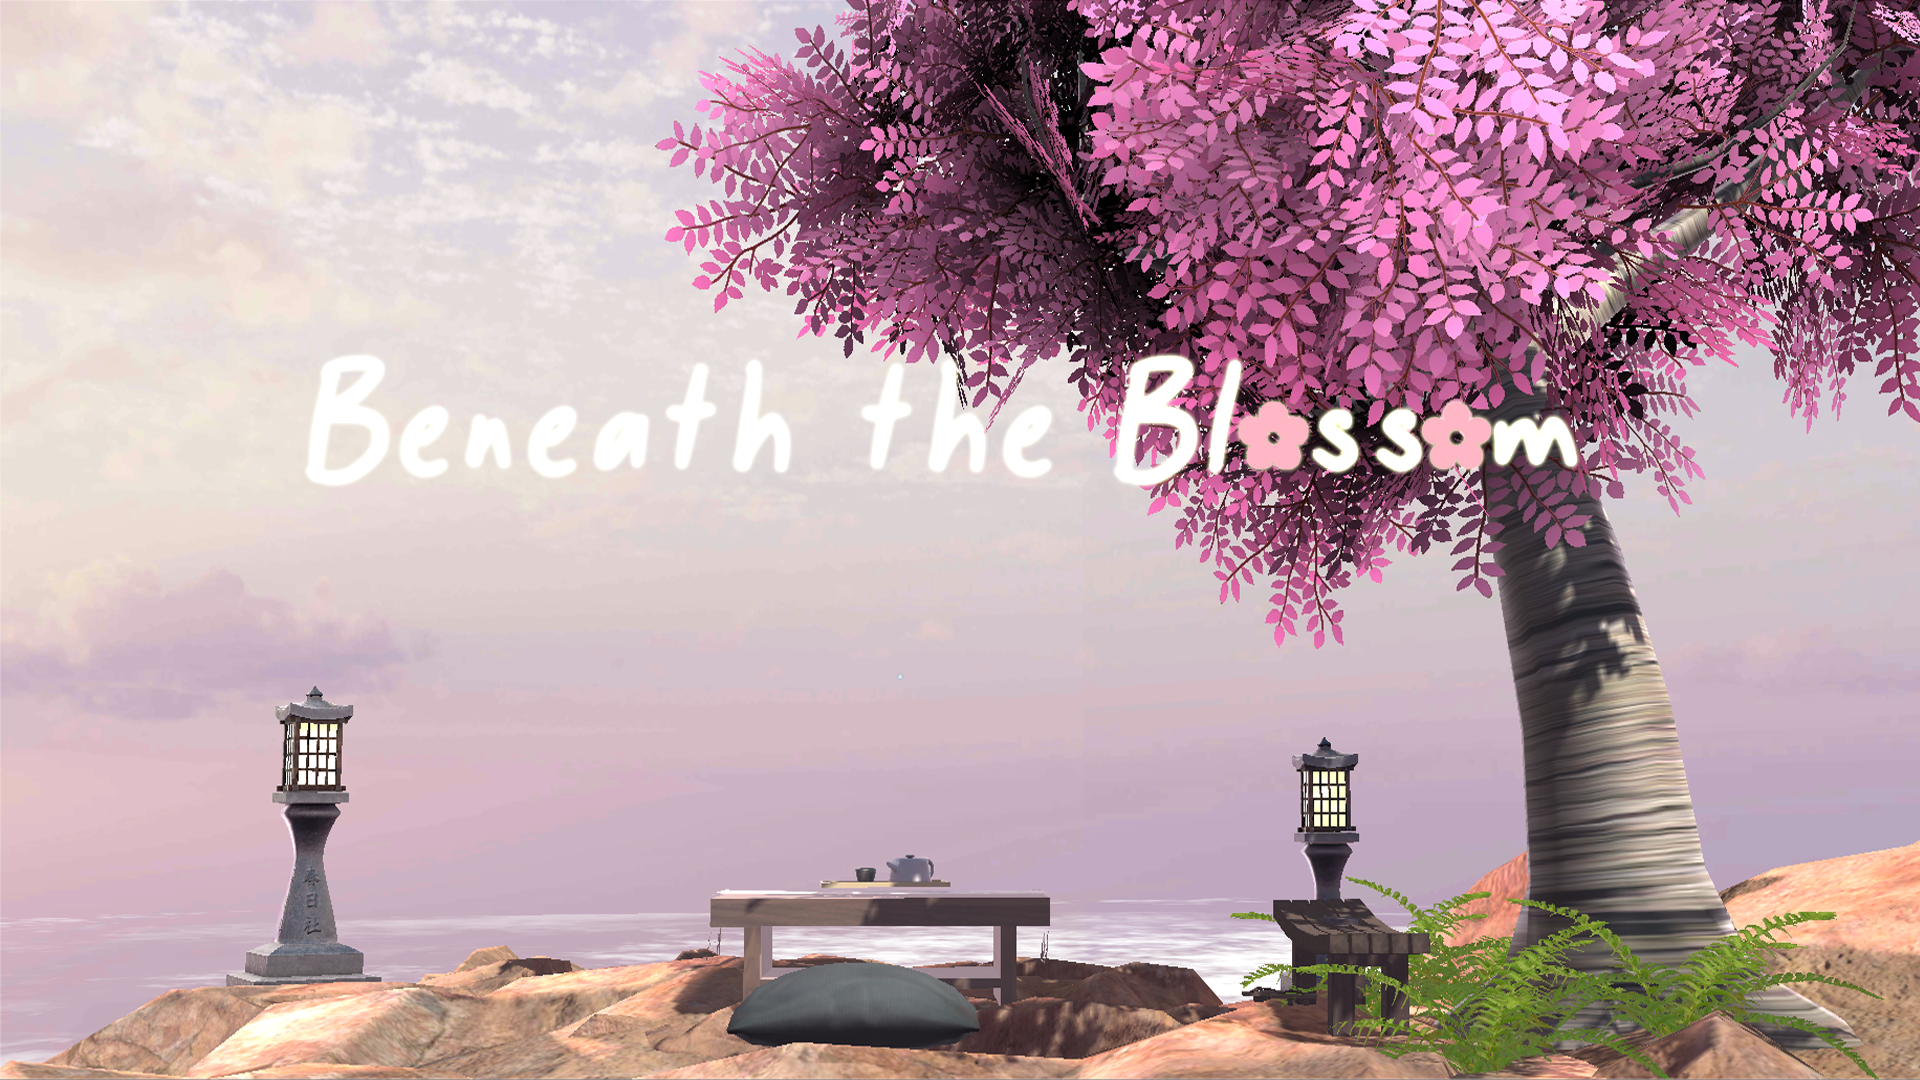 Beneath the Blossom